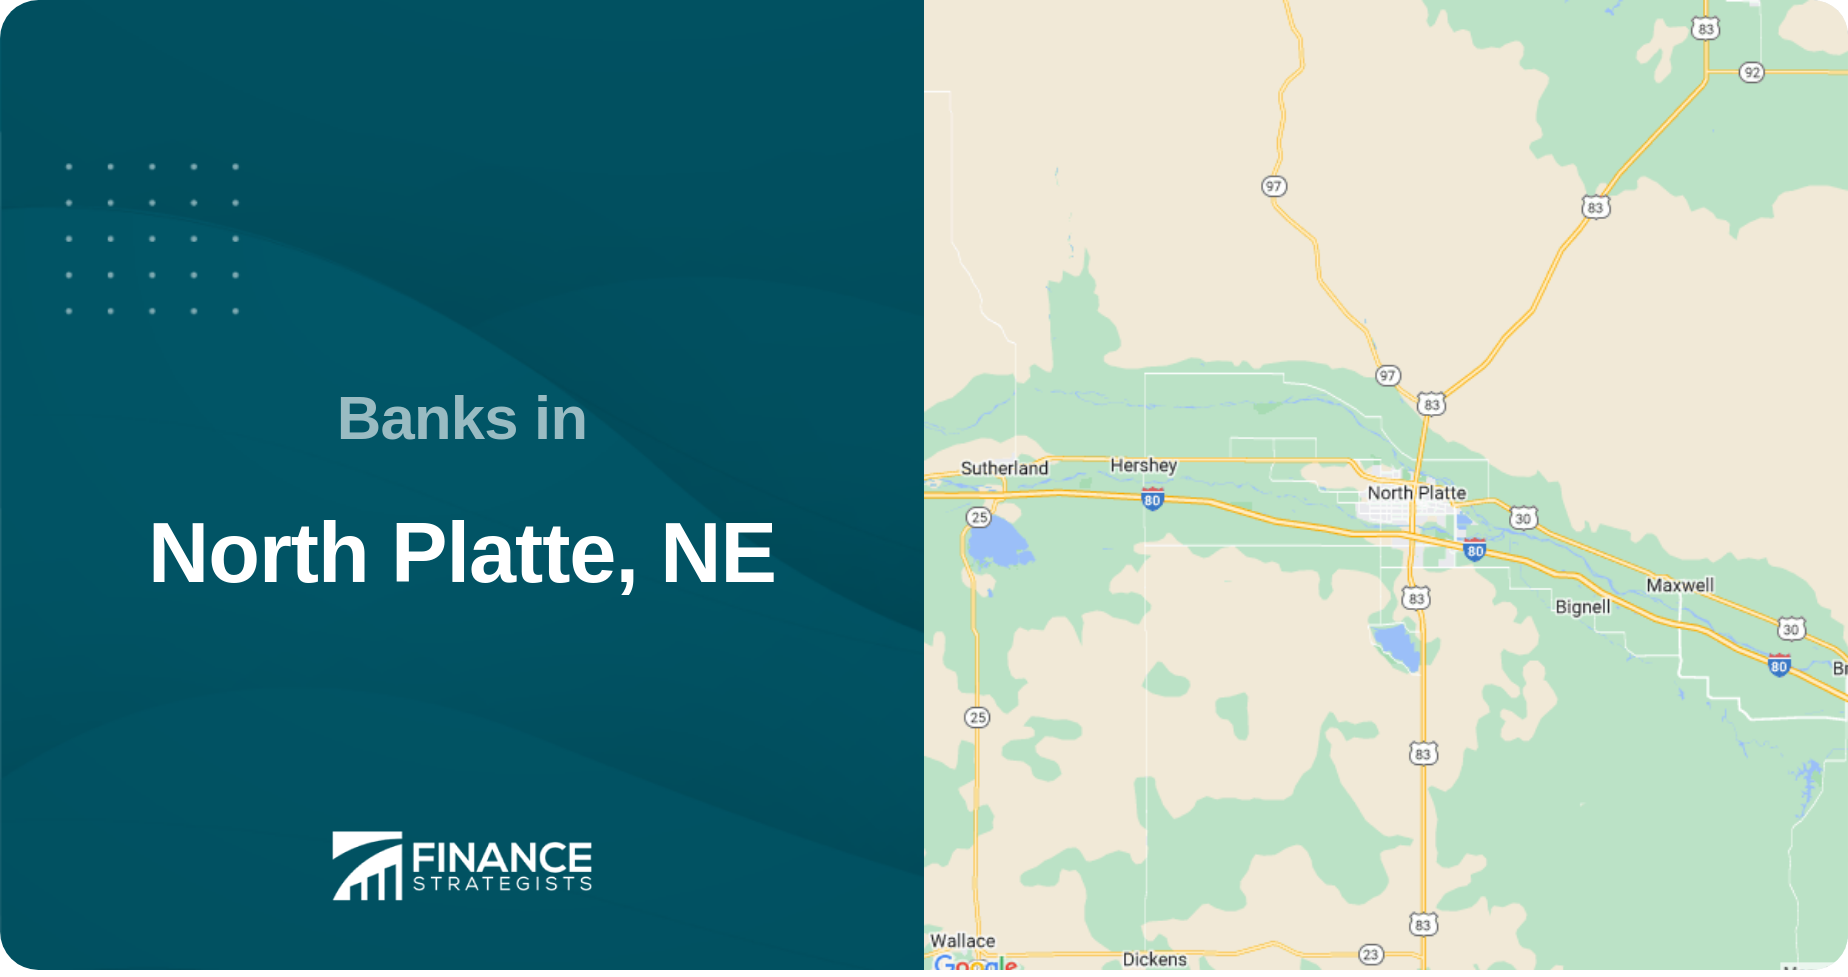 Banks in North Platte, NE